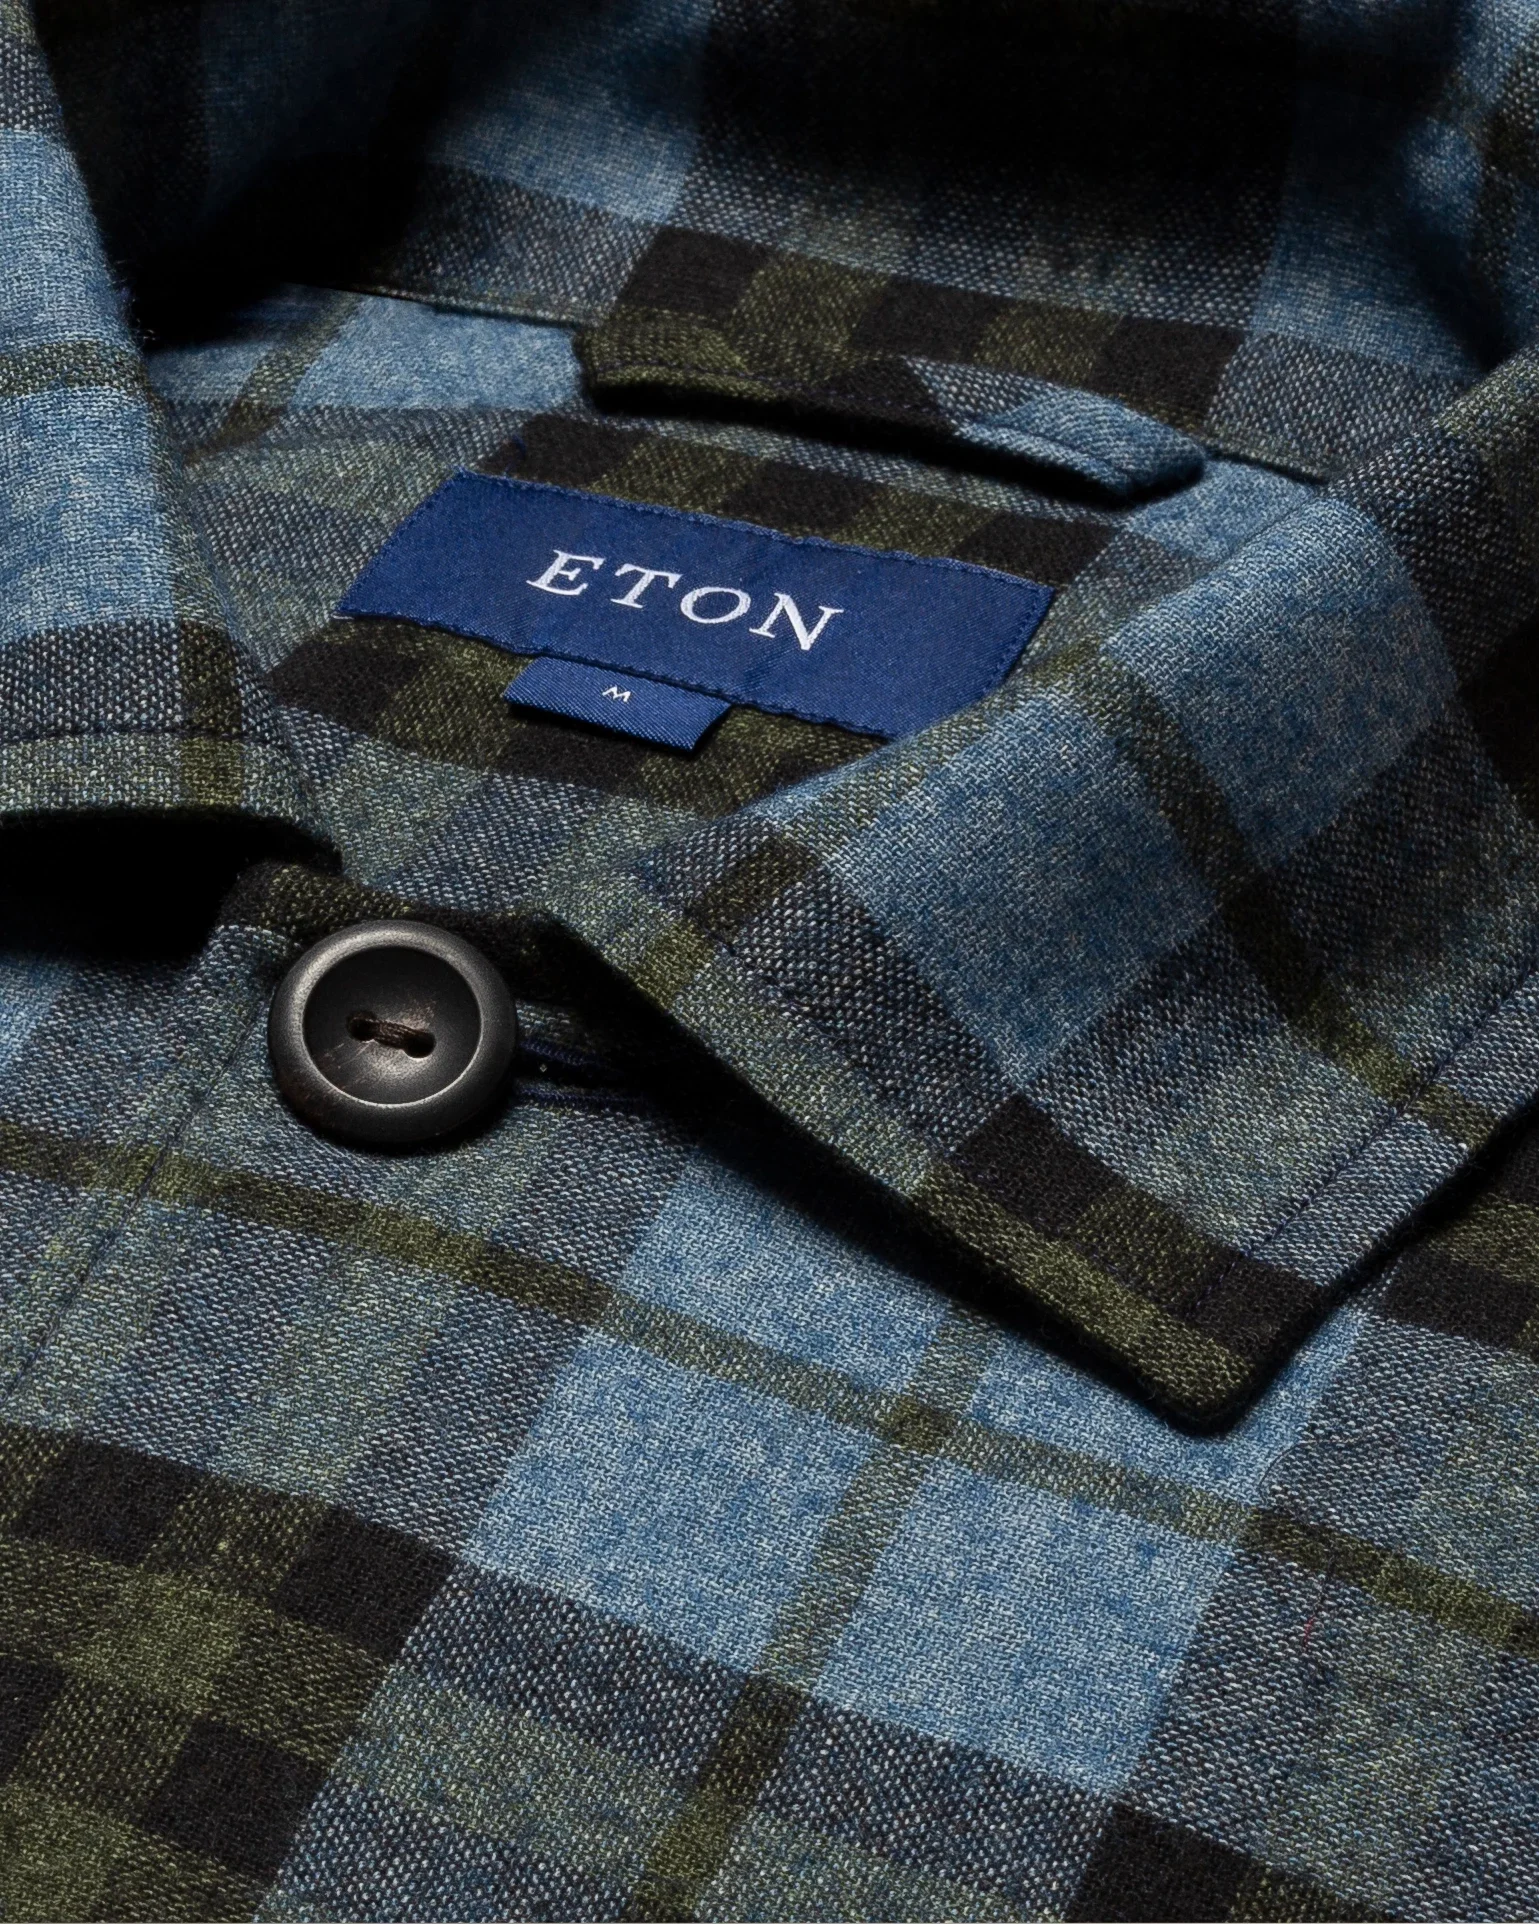 Eton - blue checked cotton wool cashmere overshirt turn down single cuff pointed strap regular